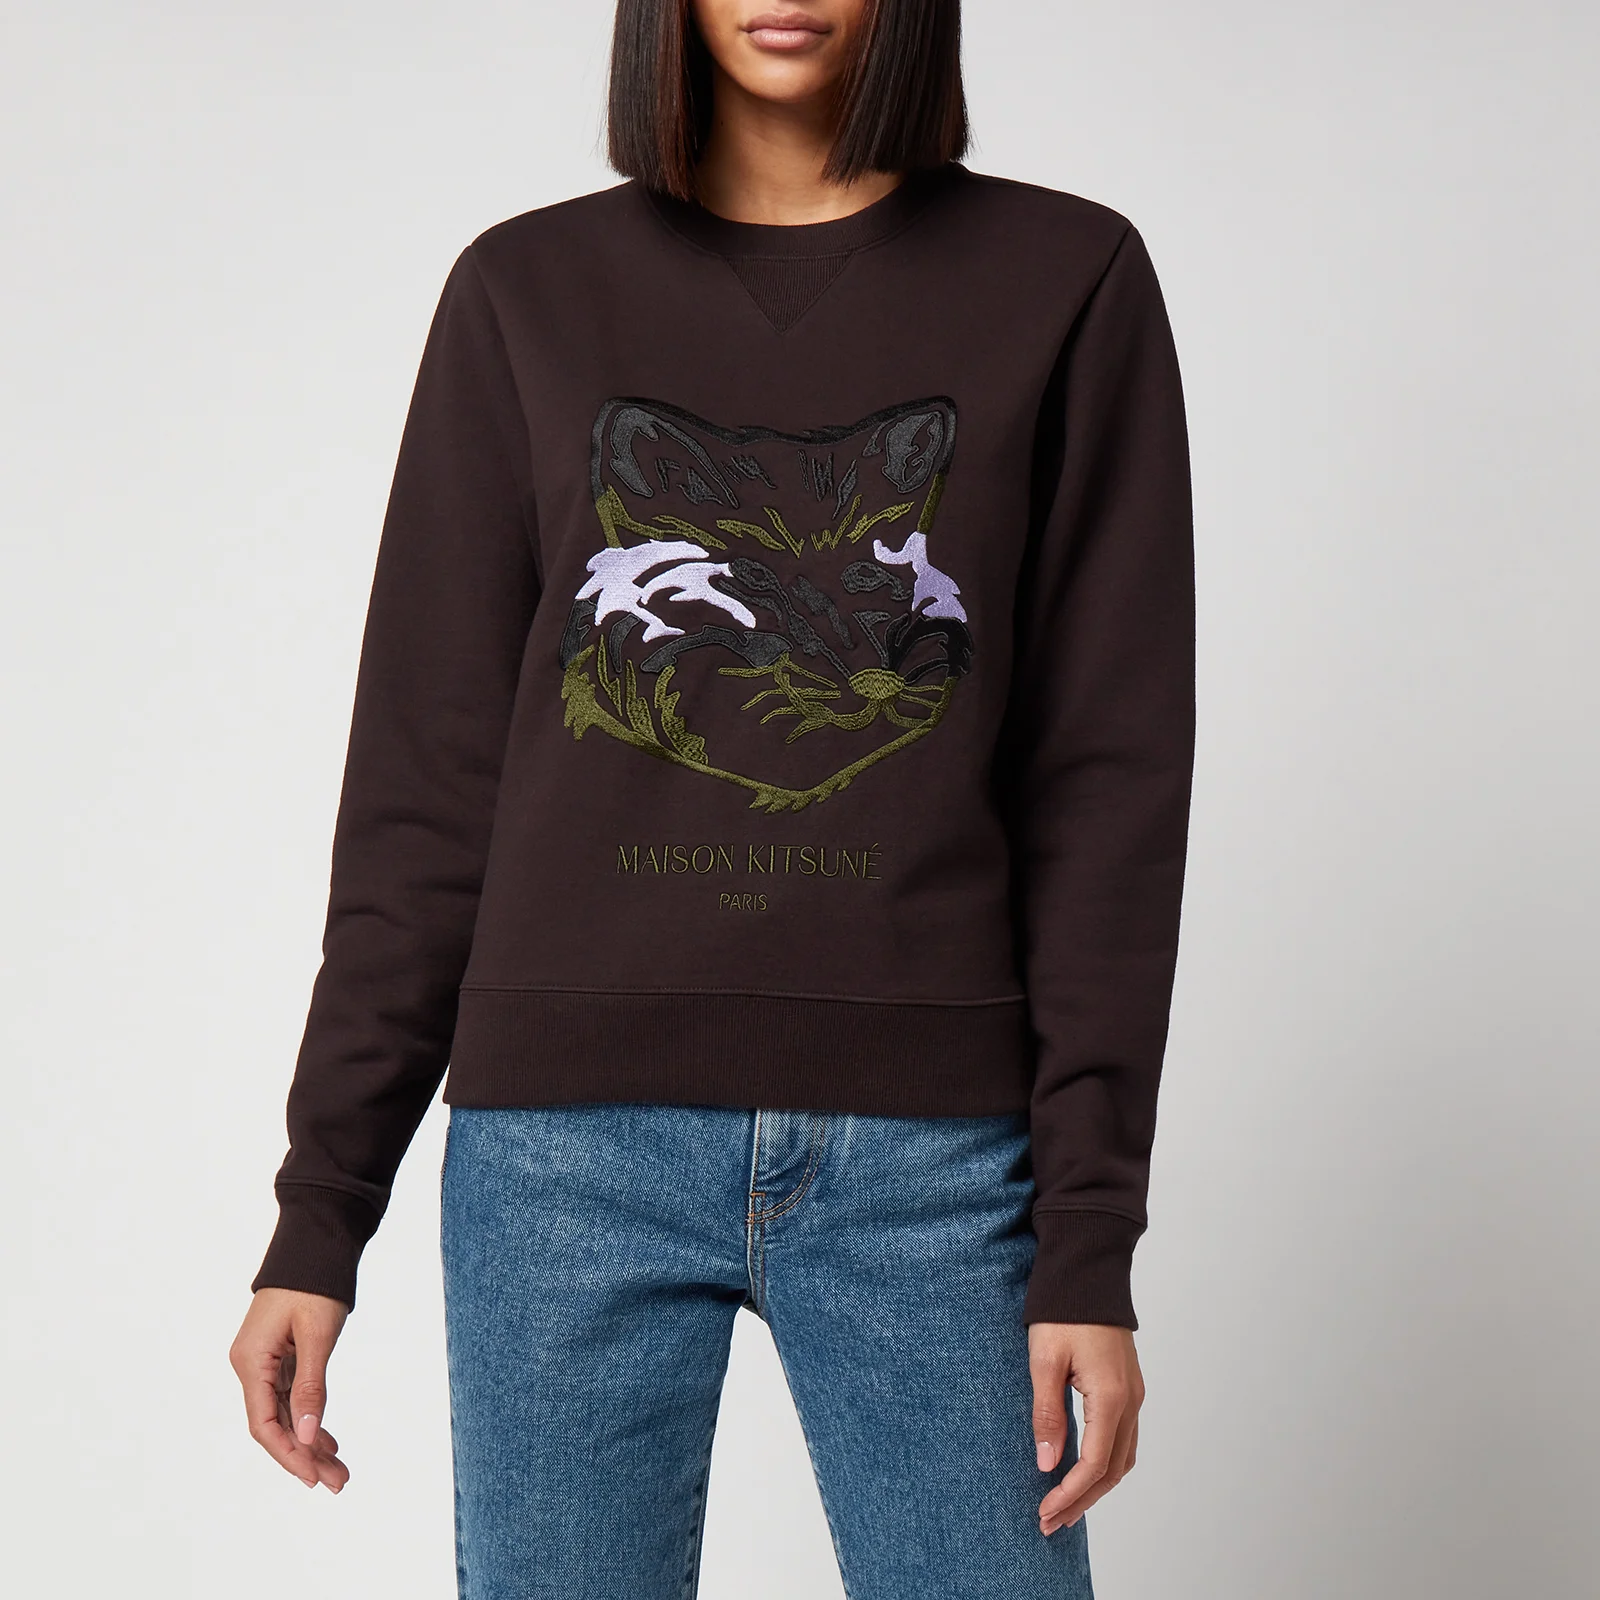 Maison Kitsuné Women's Big Fox Embroidery Regular Sweatshirt - Chocolate Image 1